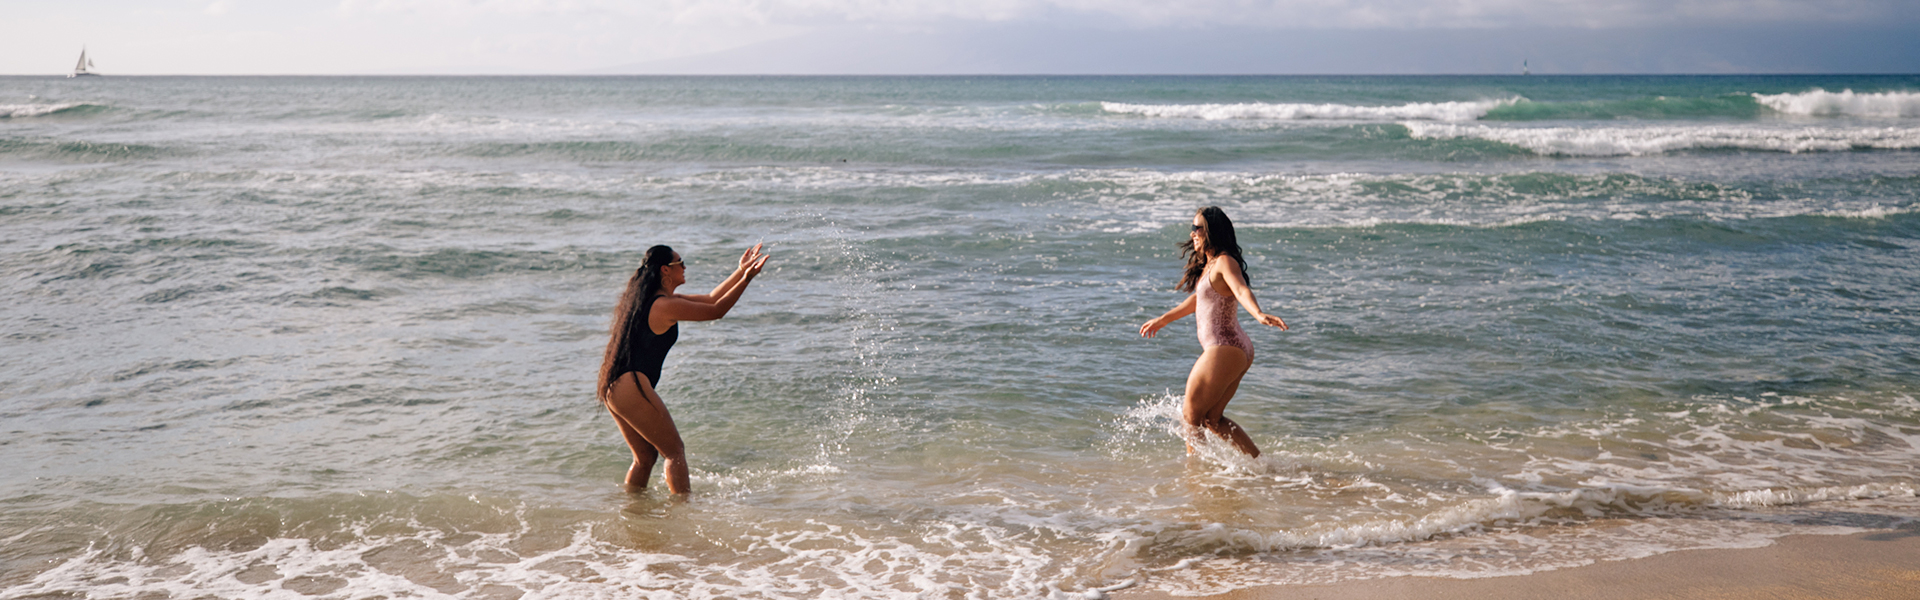 Twom women splashing on the beach